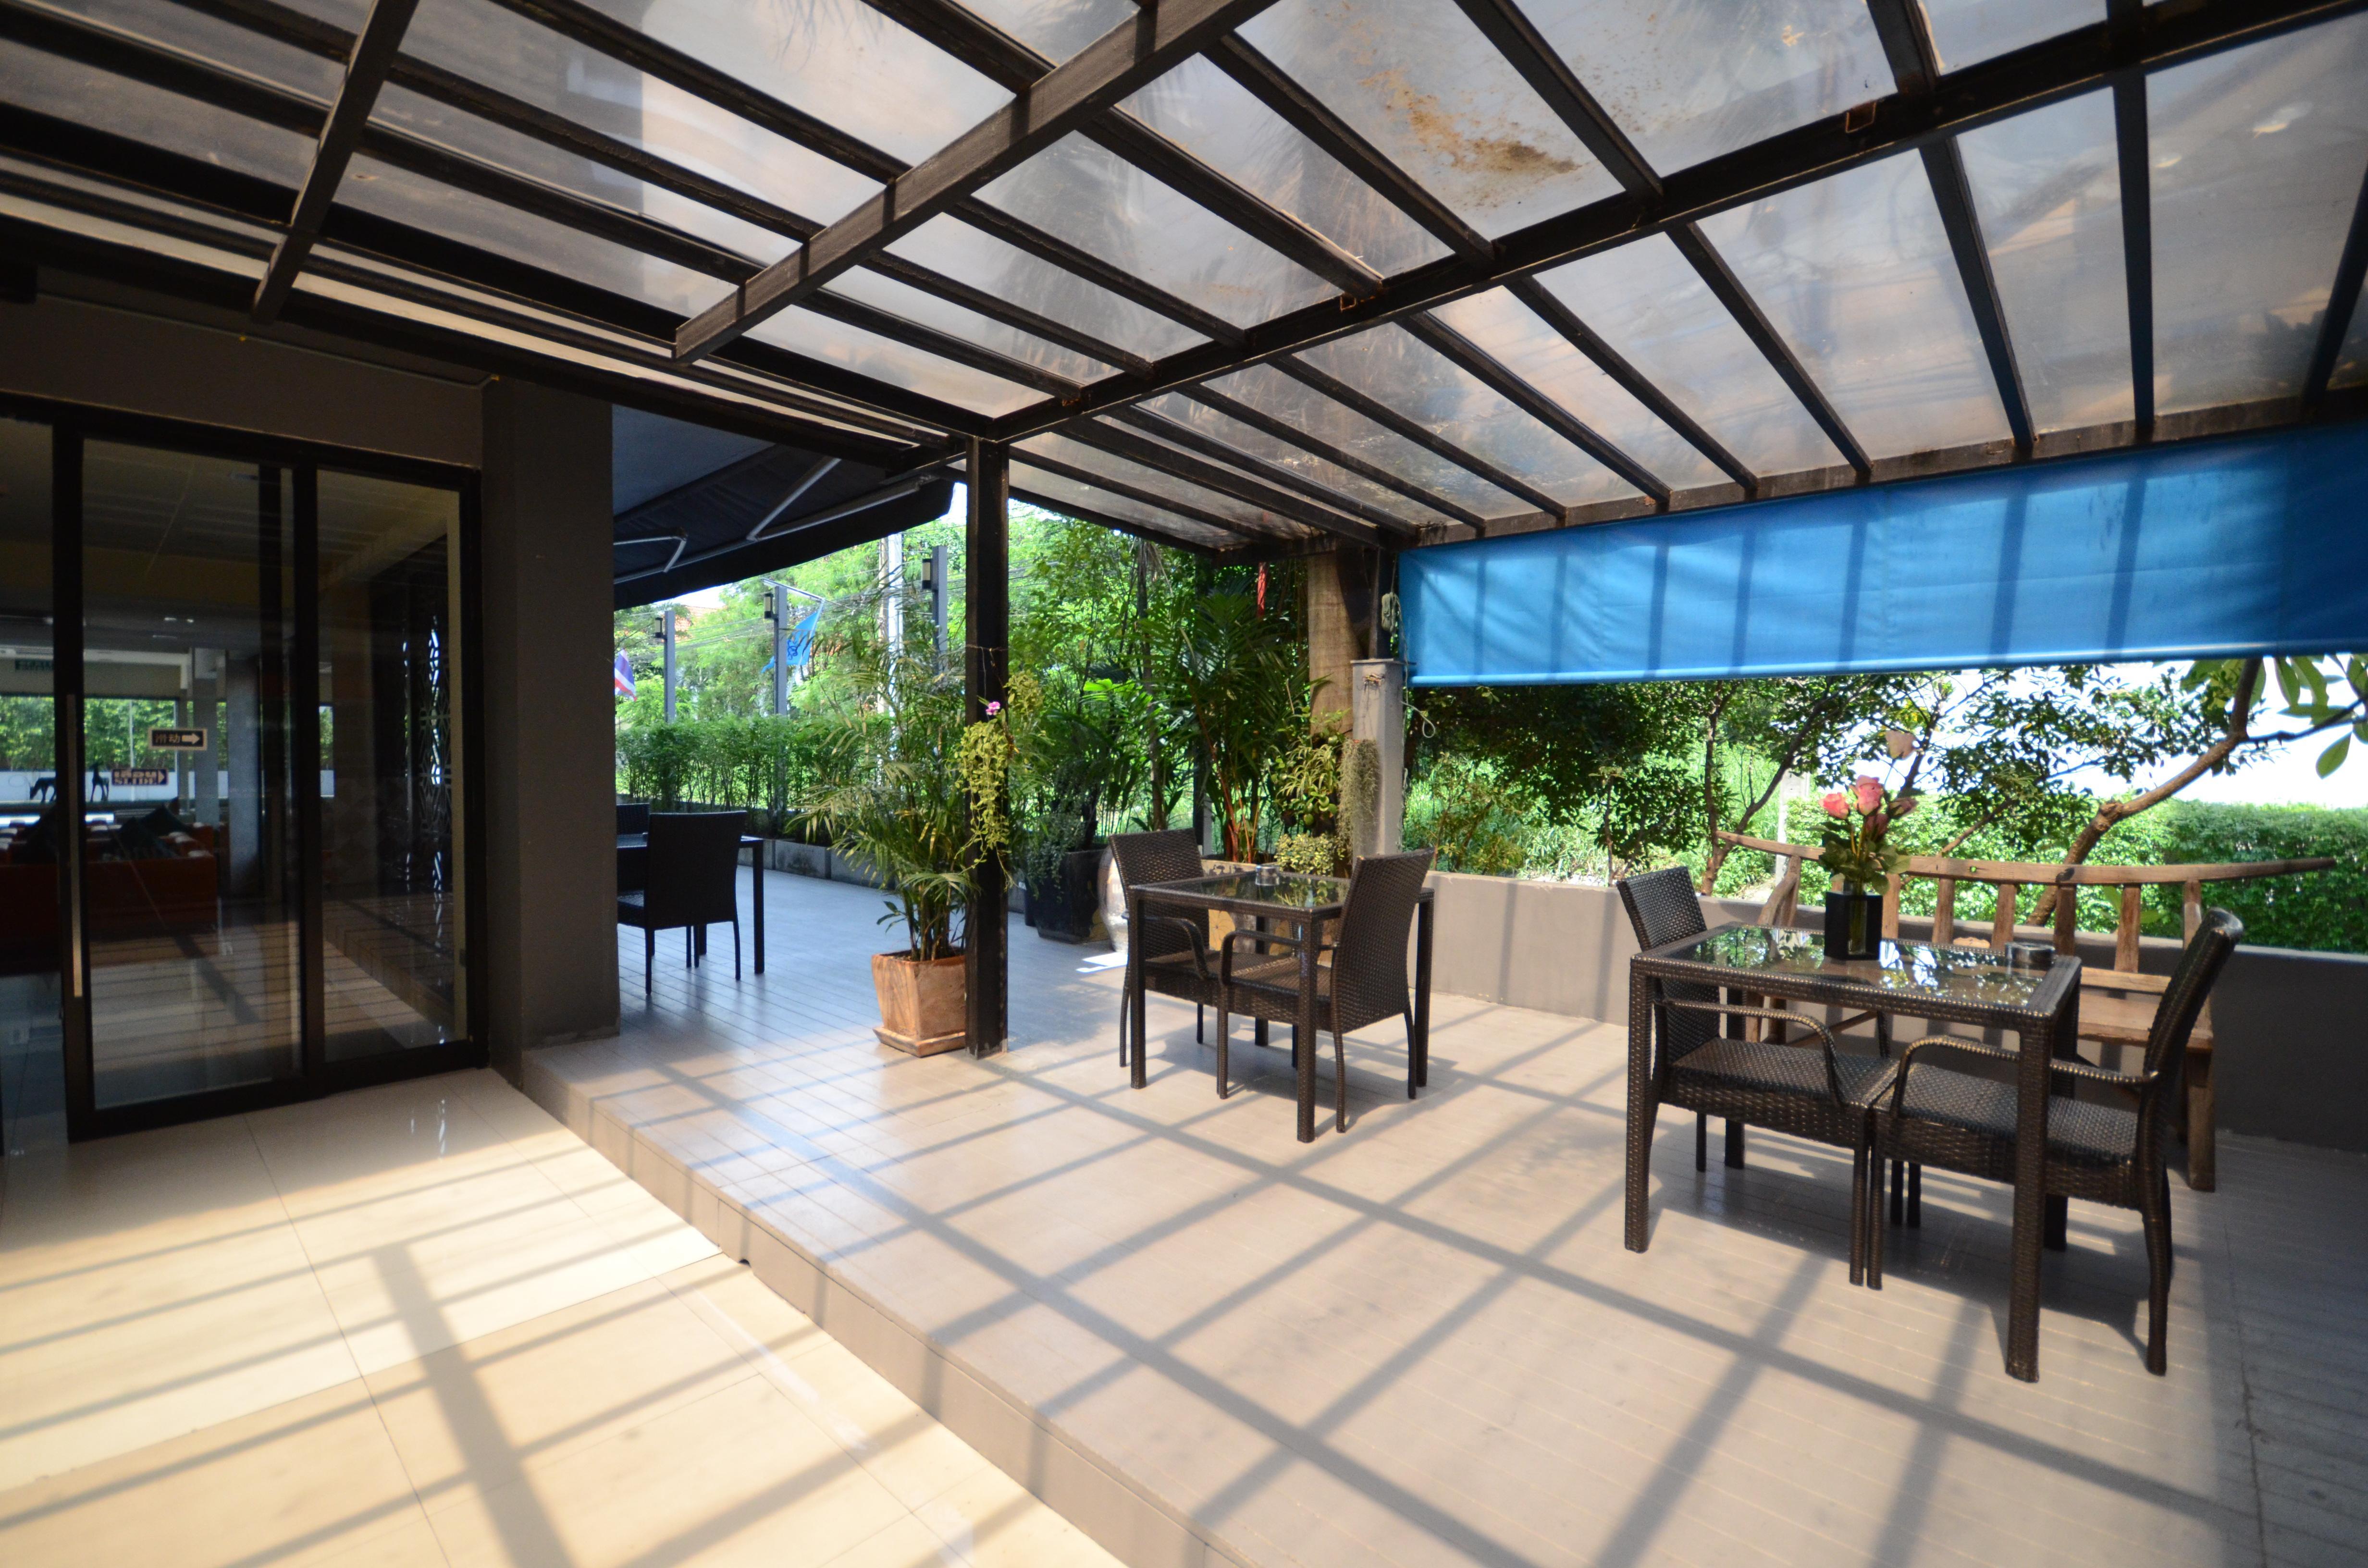 Solace At Srinakarin Hotel Banguecoque Exterior foto